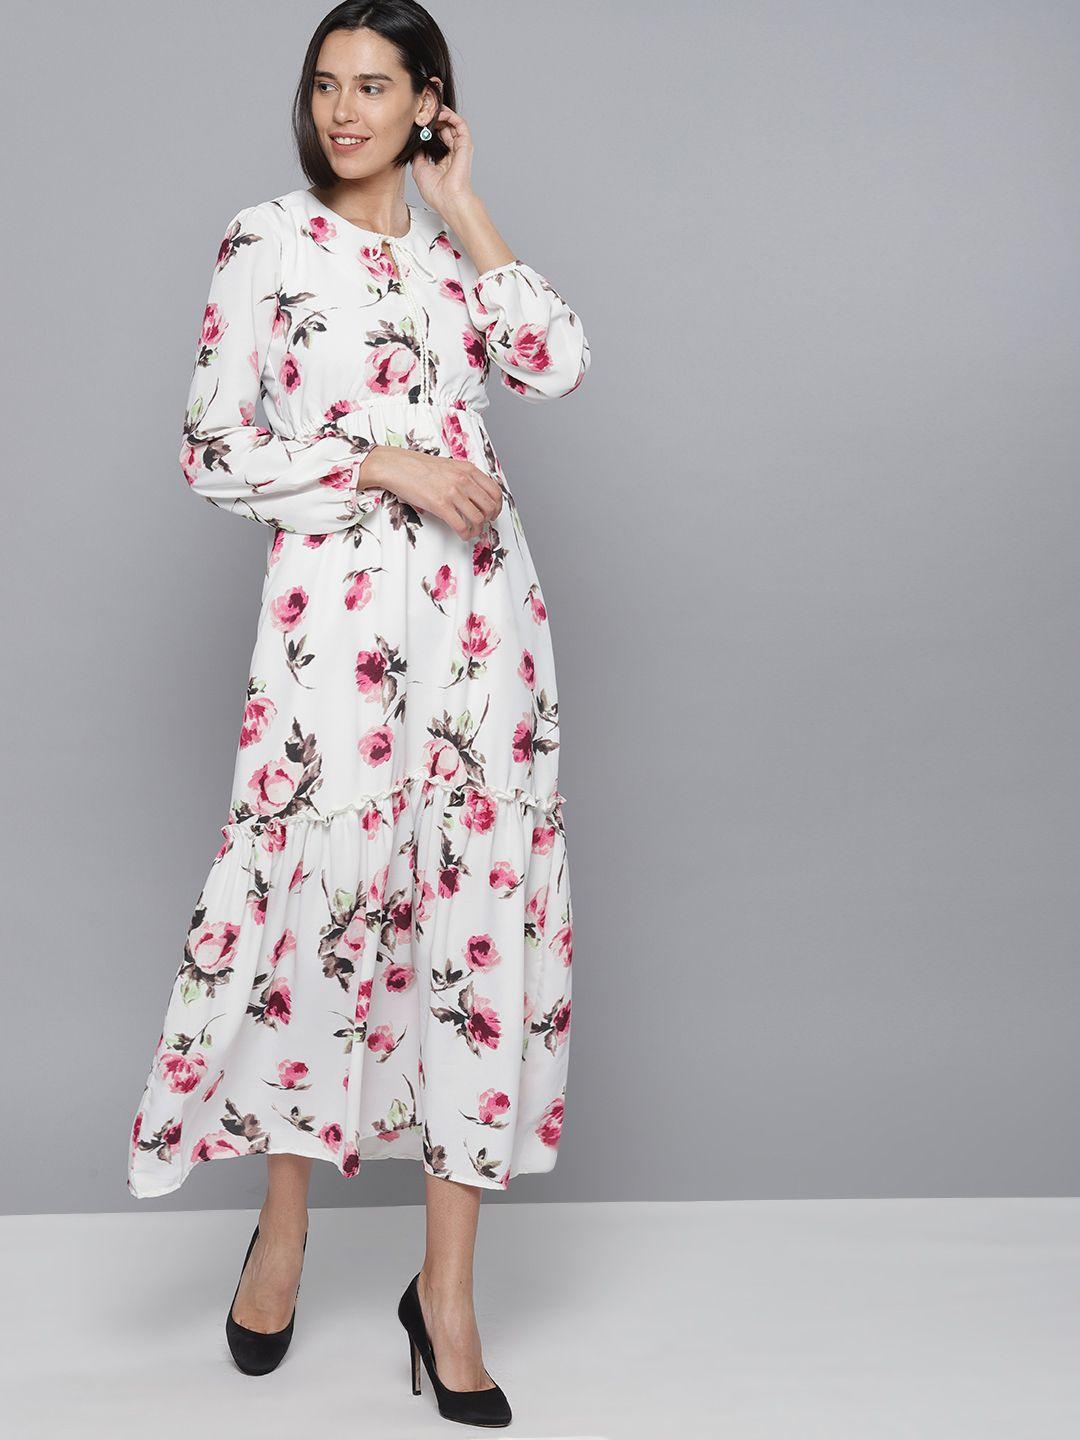 tokyo talkies women off-white & pink printed maxi dress